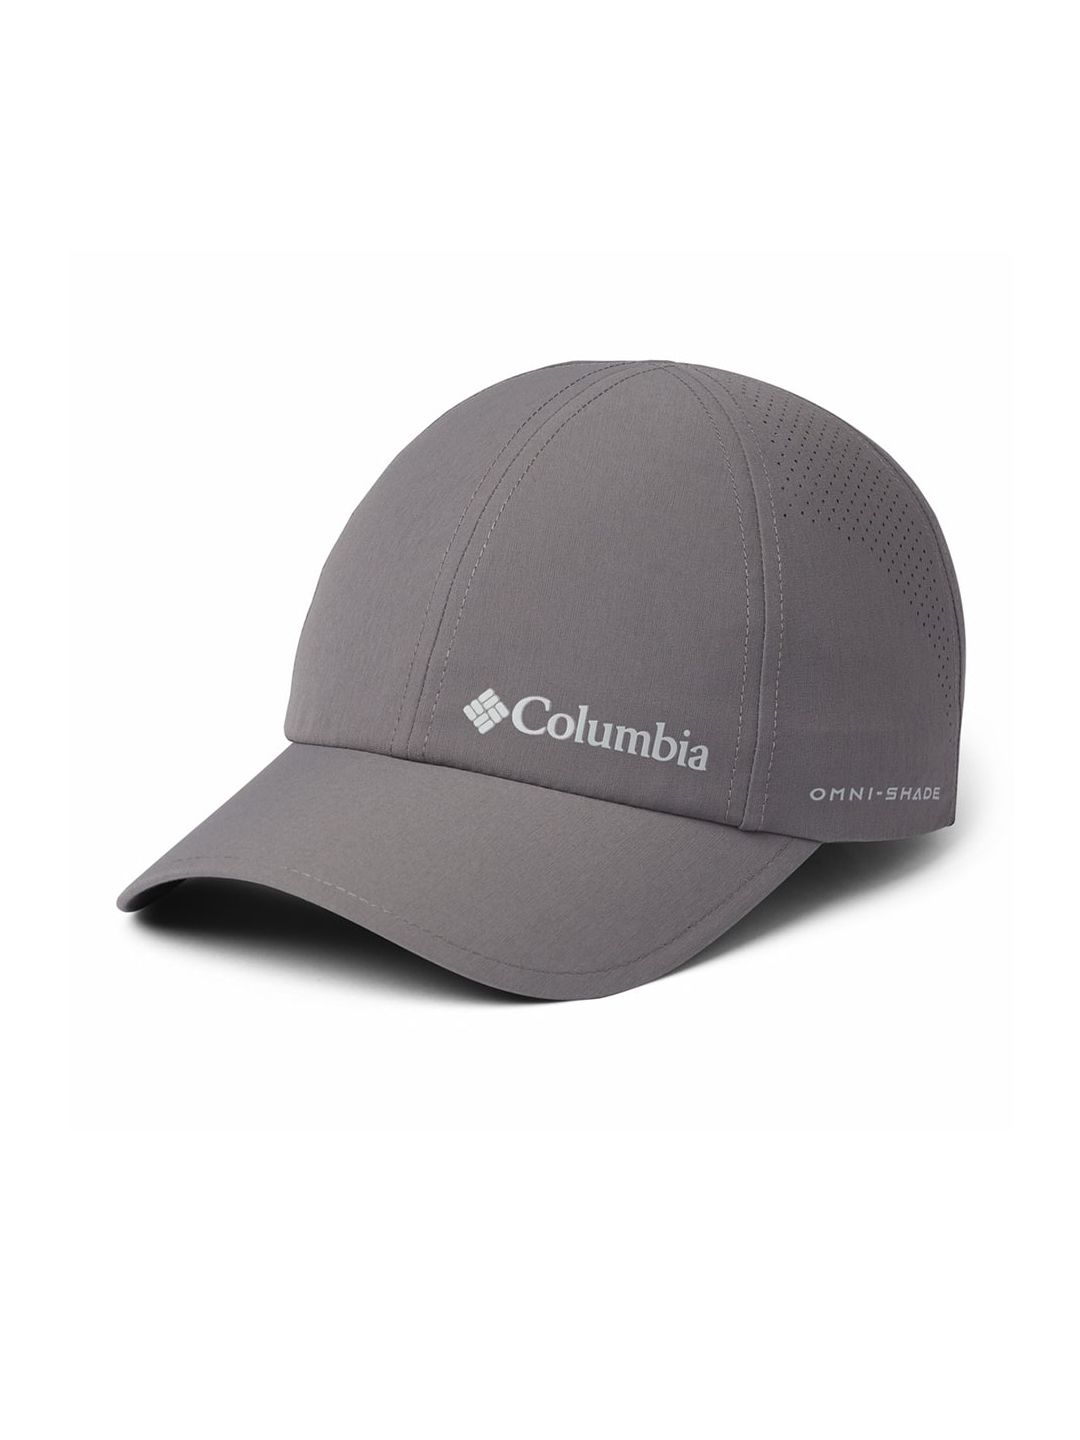 Columbia Unisex Grey Baseball Cap With Brand Logo Detail Price in India